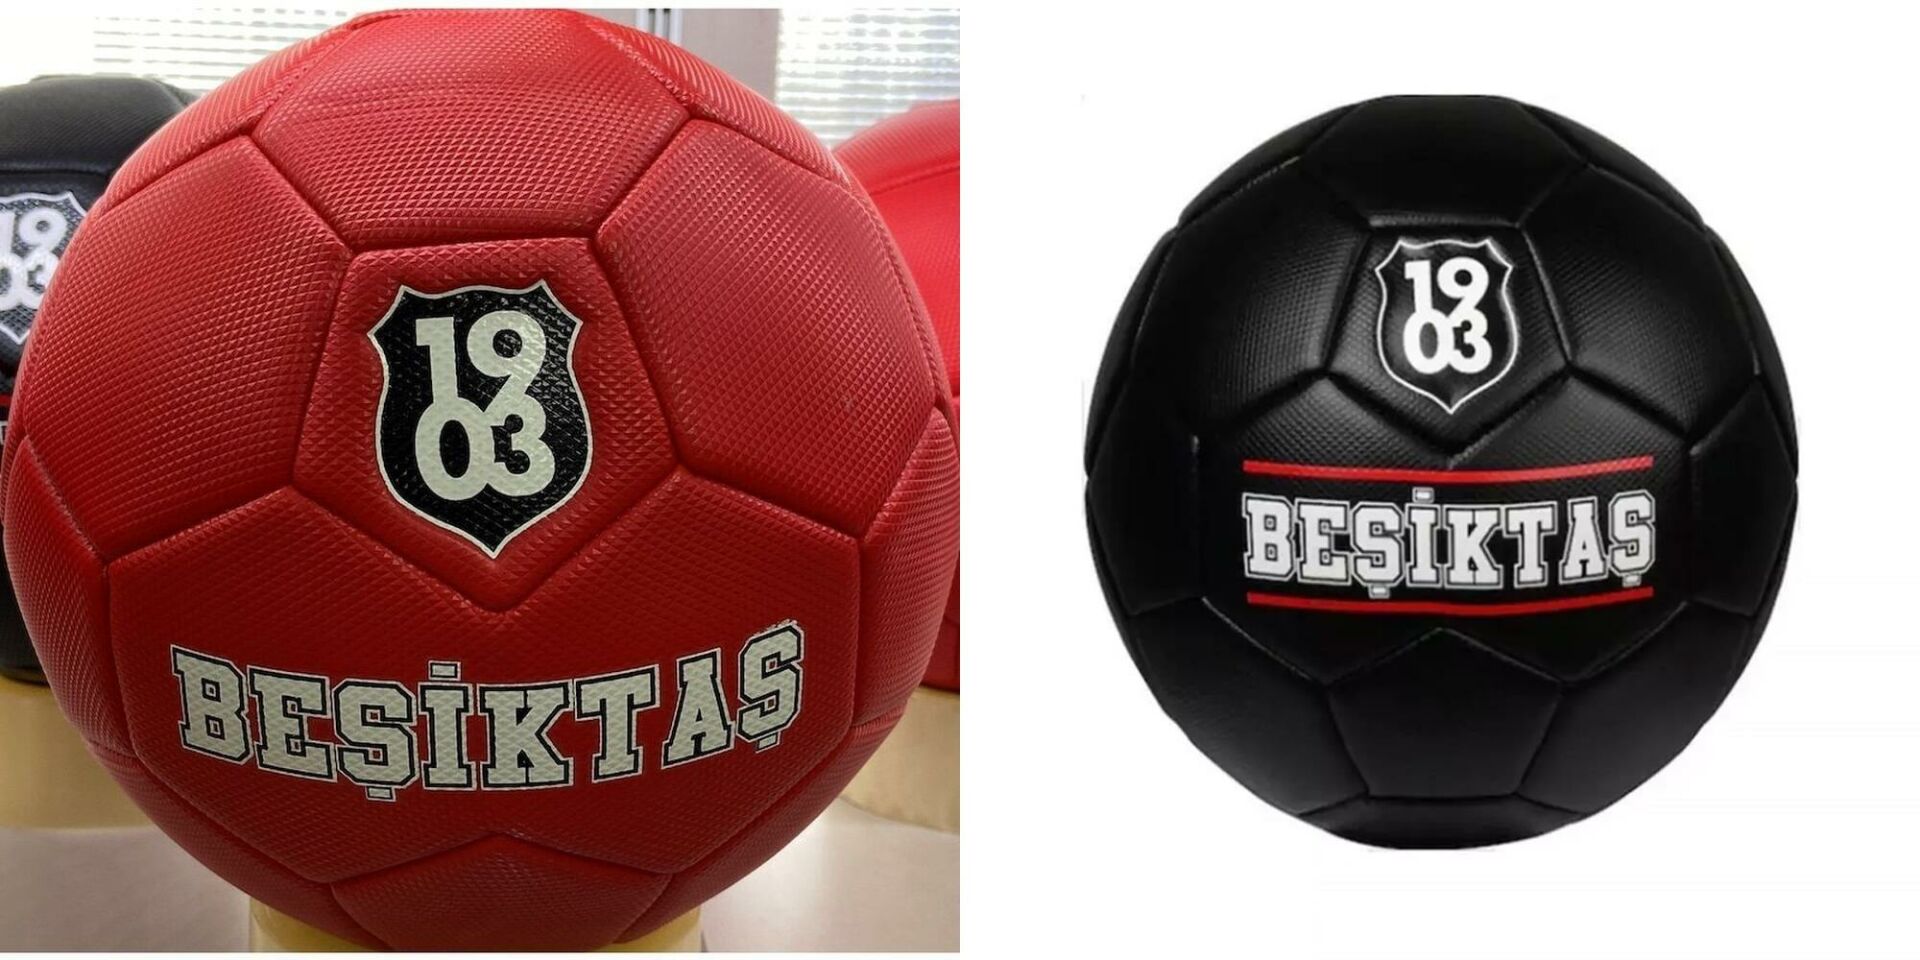 Timon No:5 Beşiktaş Premium Futbol Topu 482657